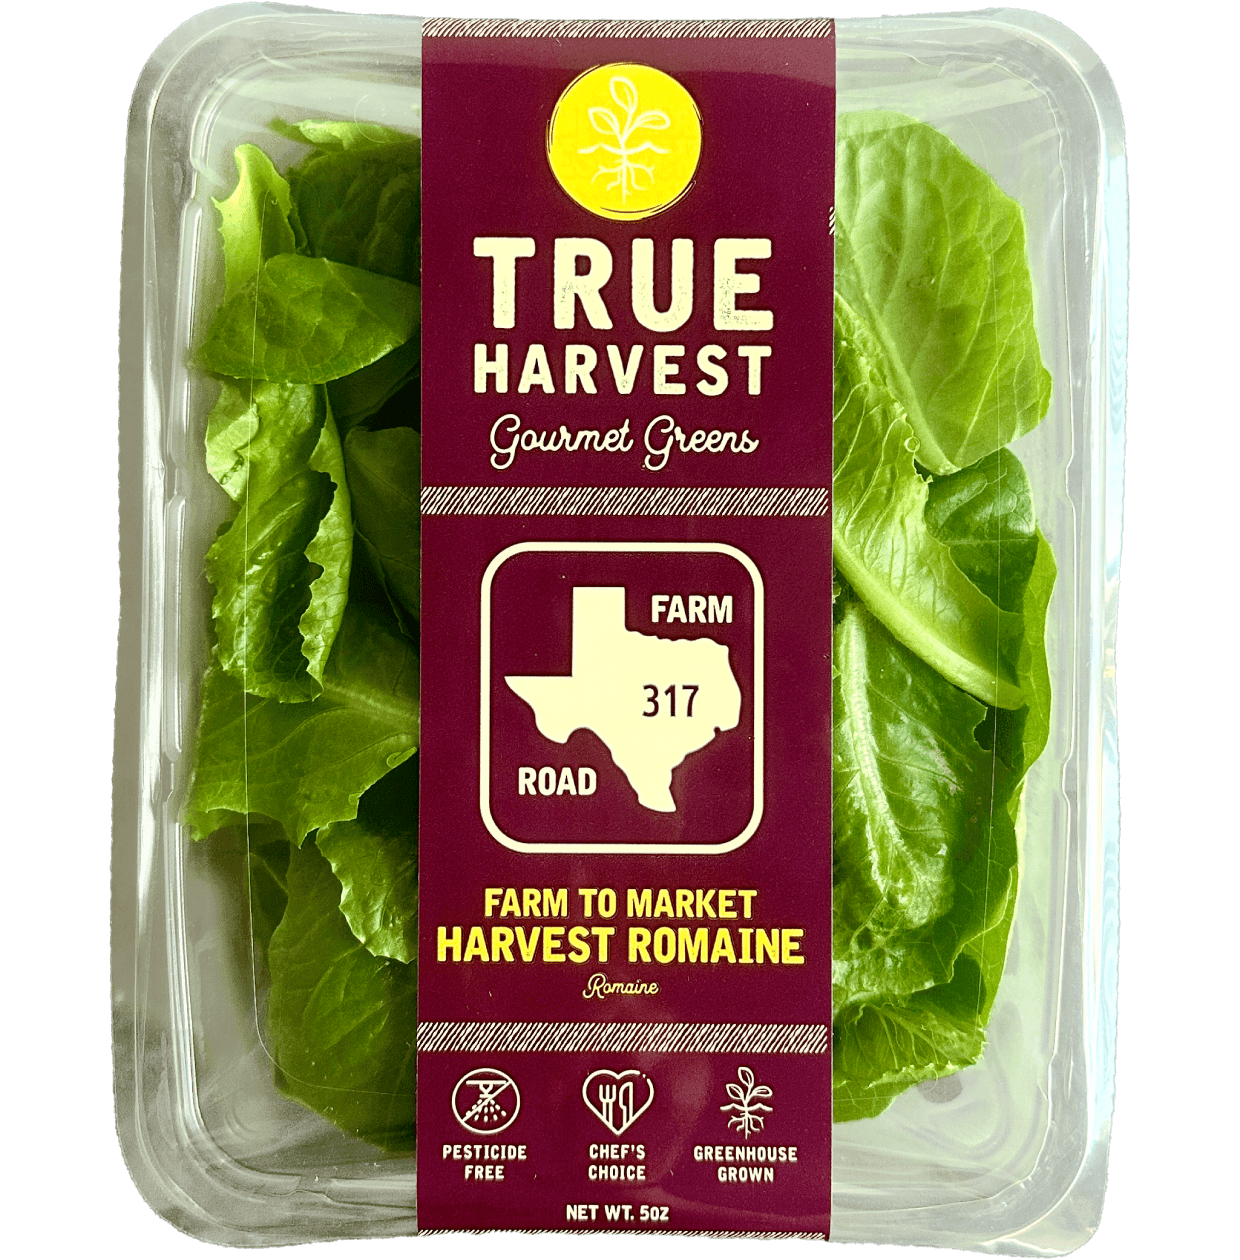 TrueHarvest Farms gourmet greens farm to market Harvest Romaine clamshell packaging